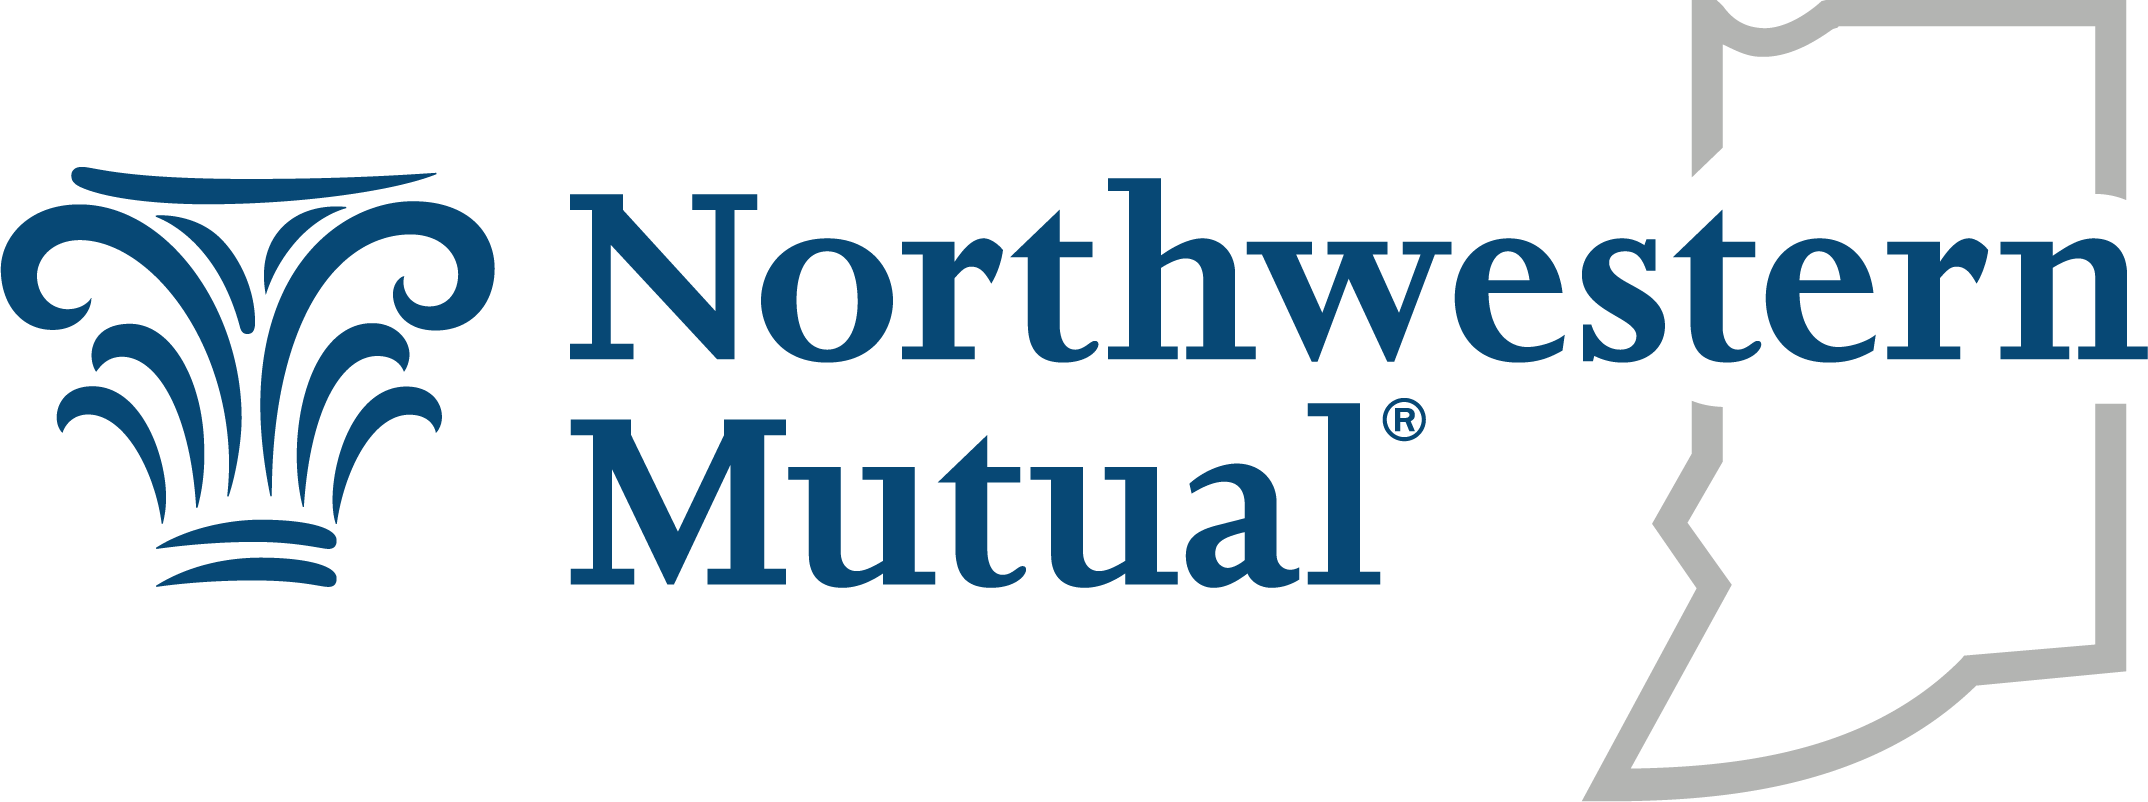 Northwestern Mutual - Indiana logo